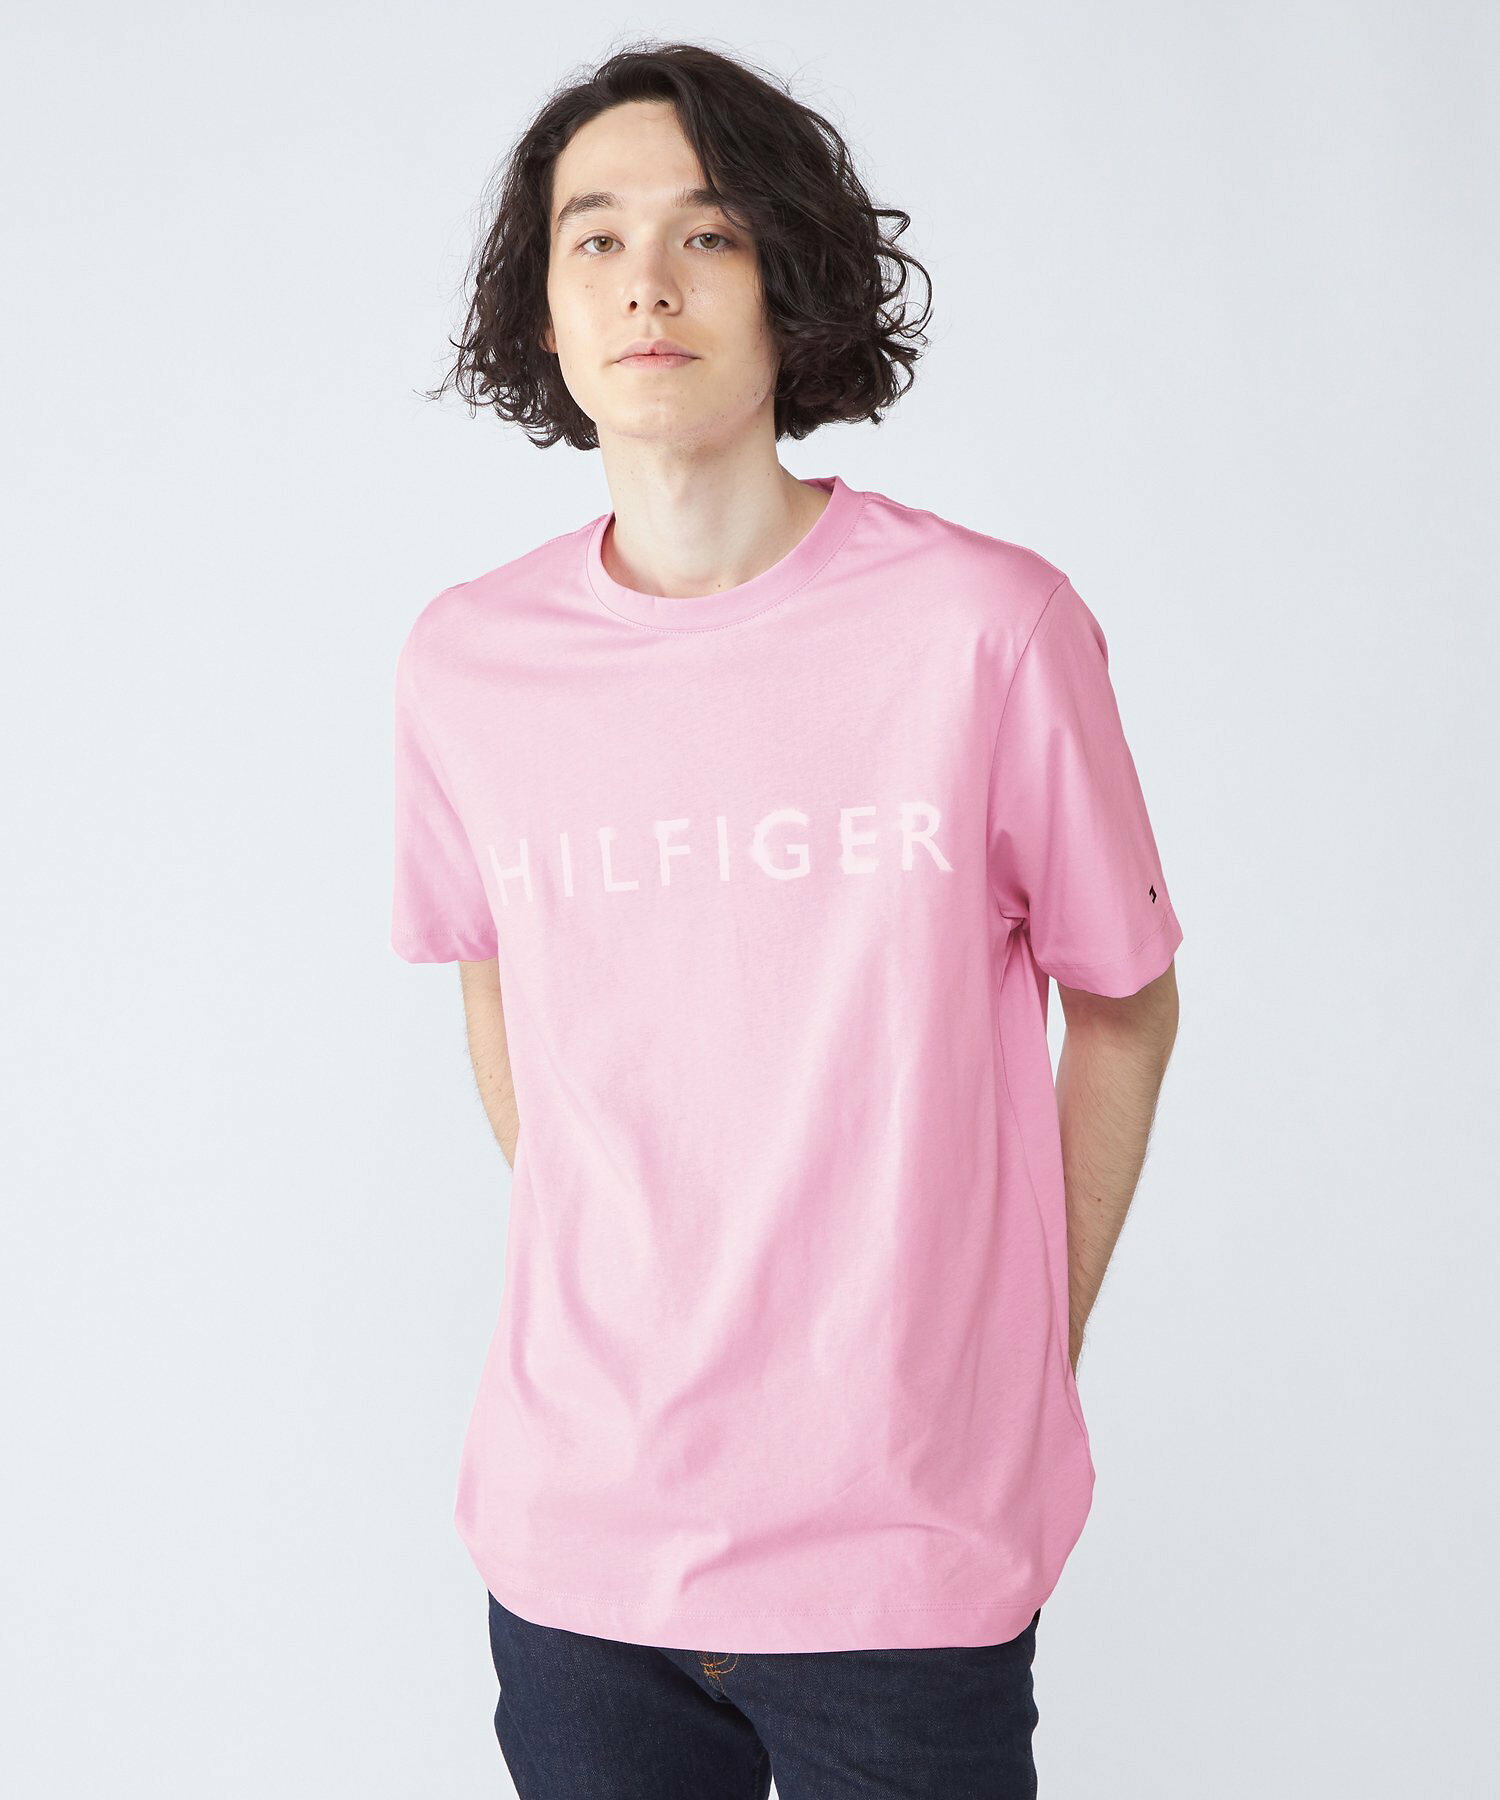 TOMMY HILFIGER(トミーヒルフィガー) 【オンライン限定】フェードロゴTシャツ